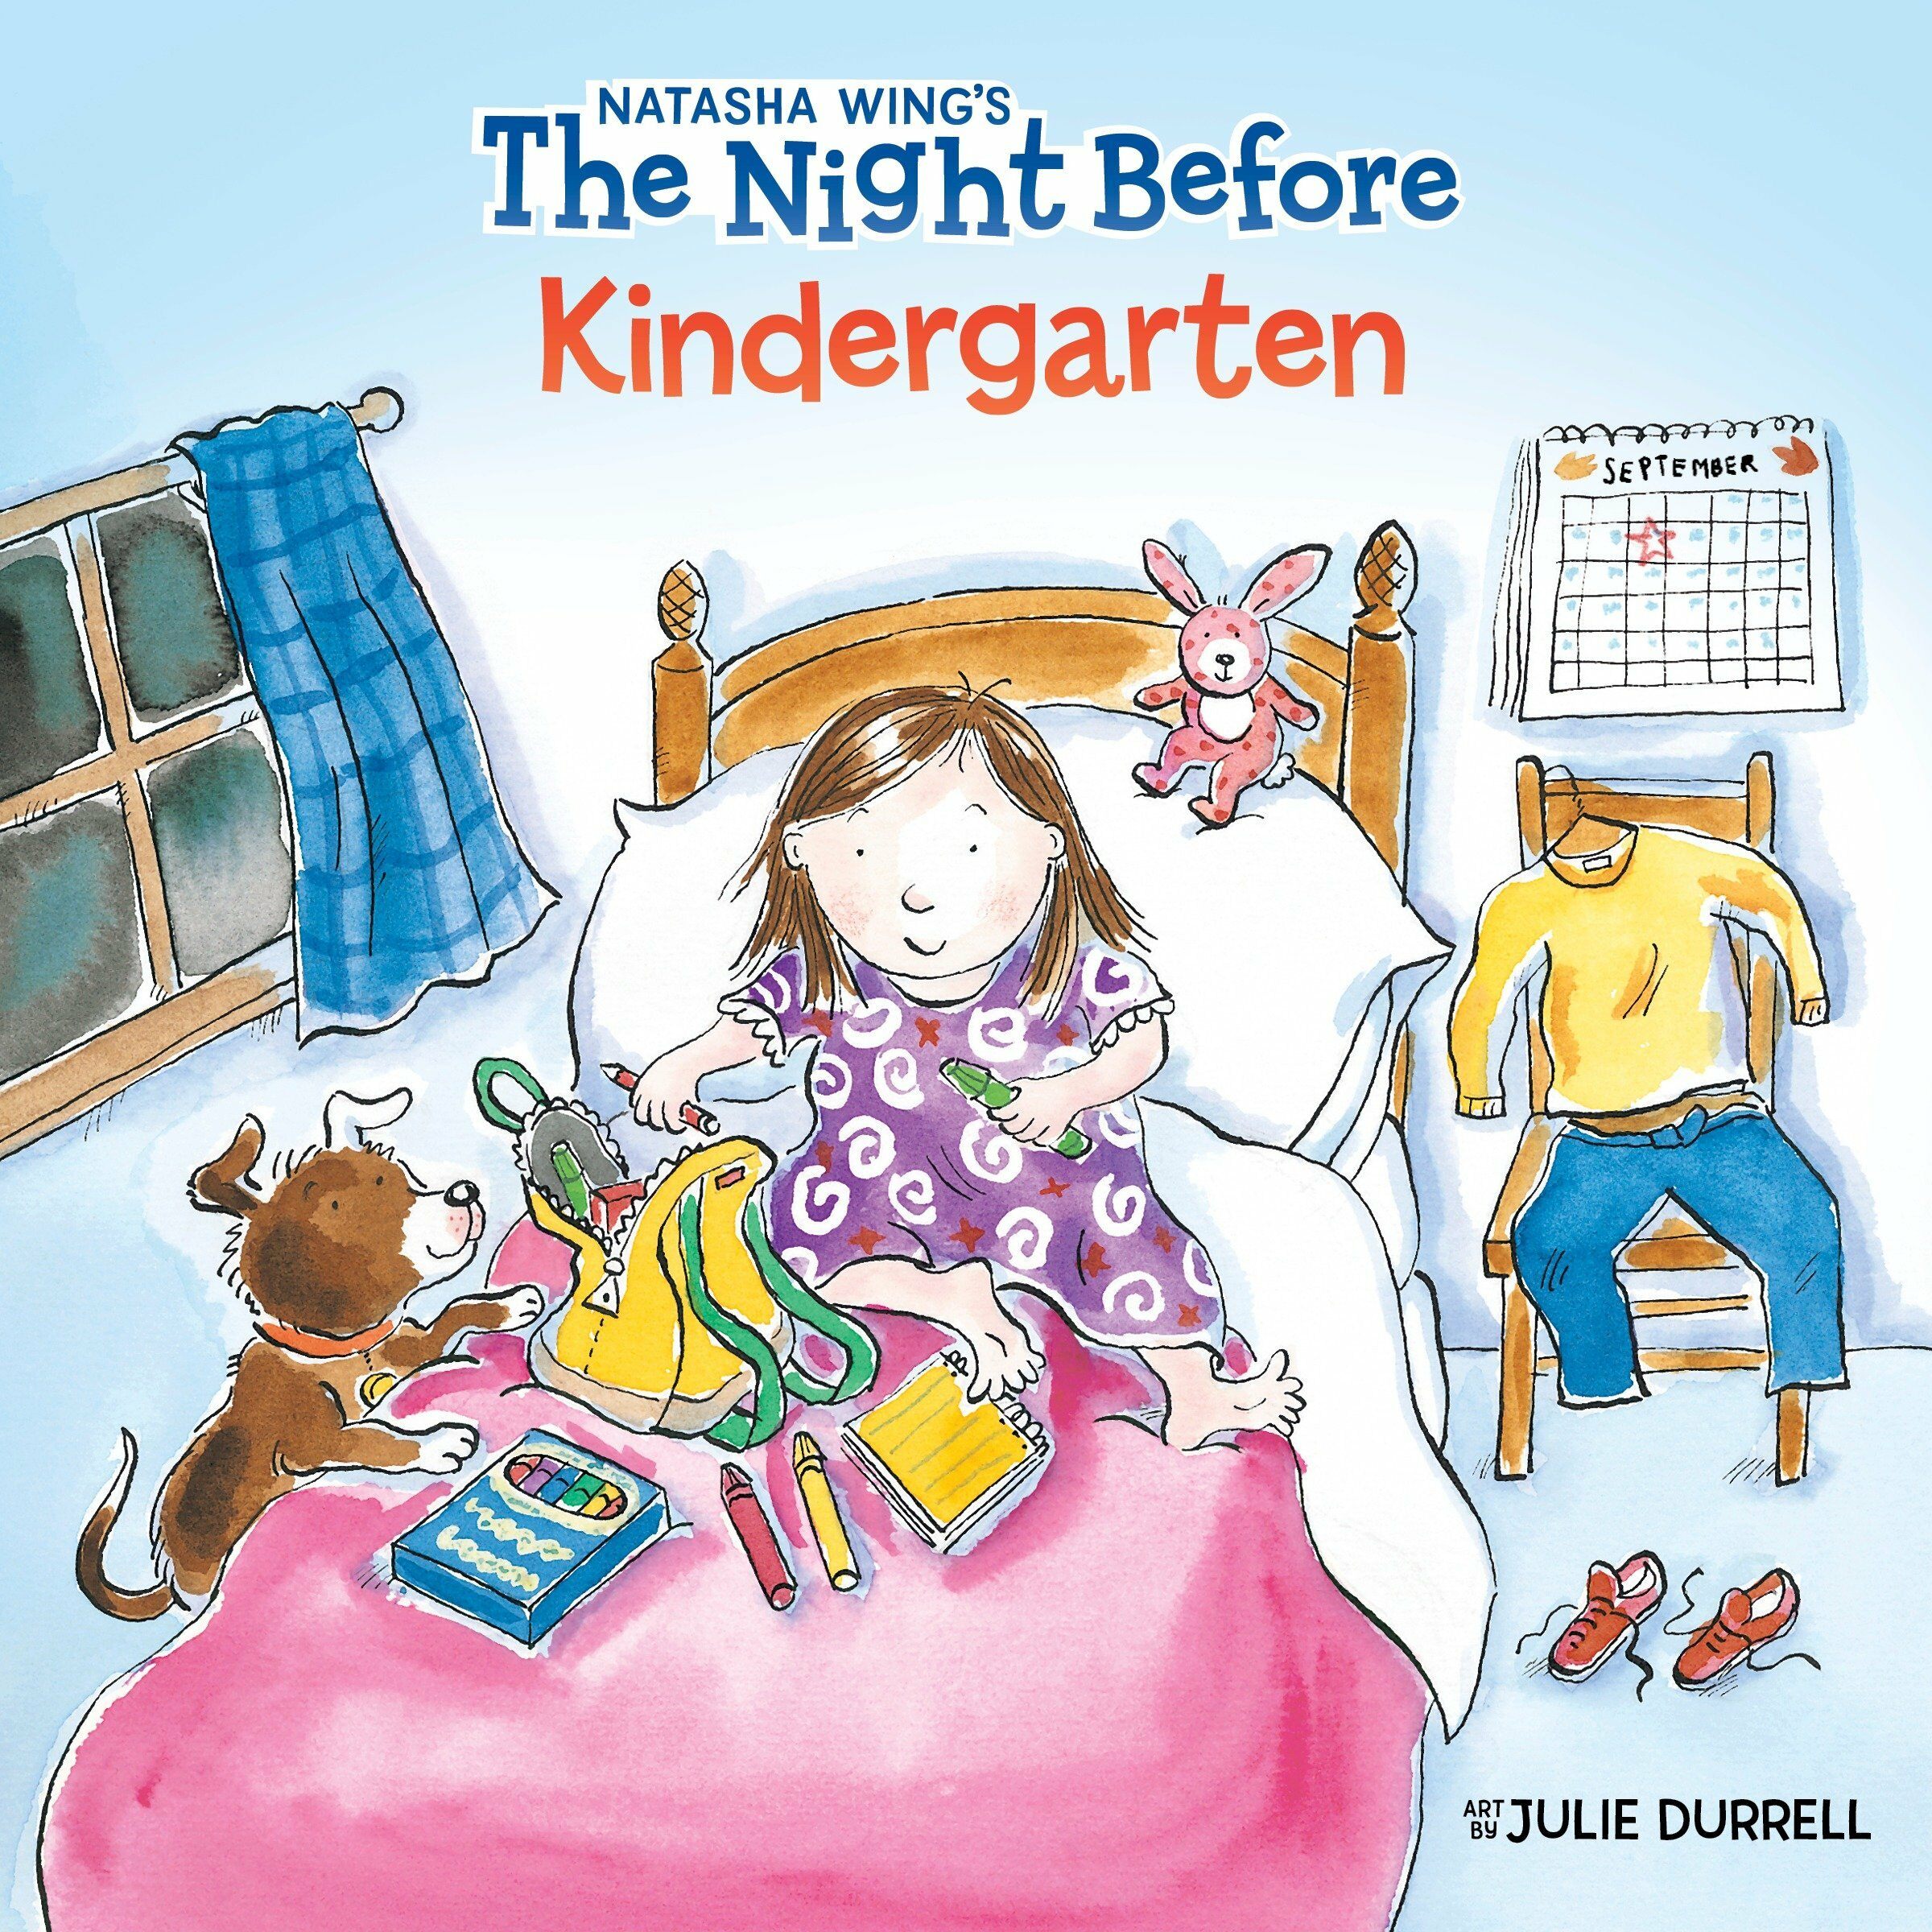 The Night Before Kindergarten (Paperback)